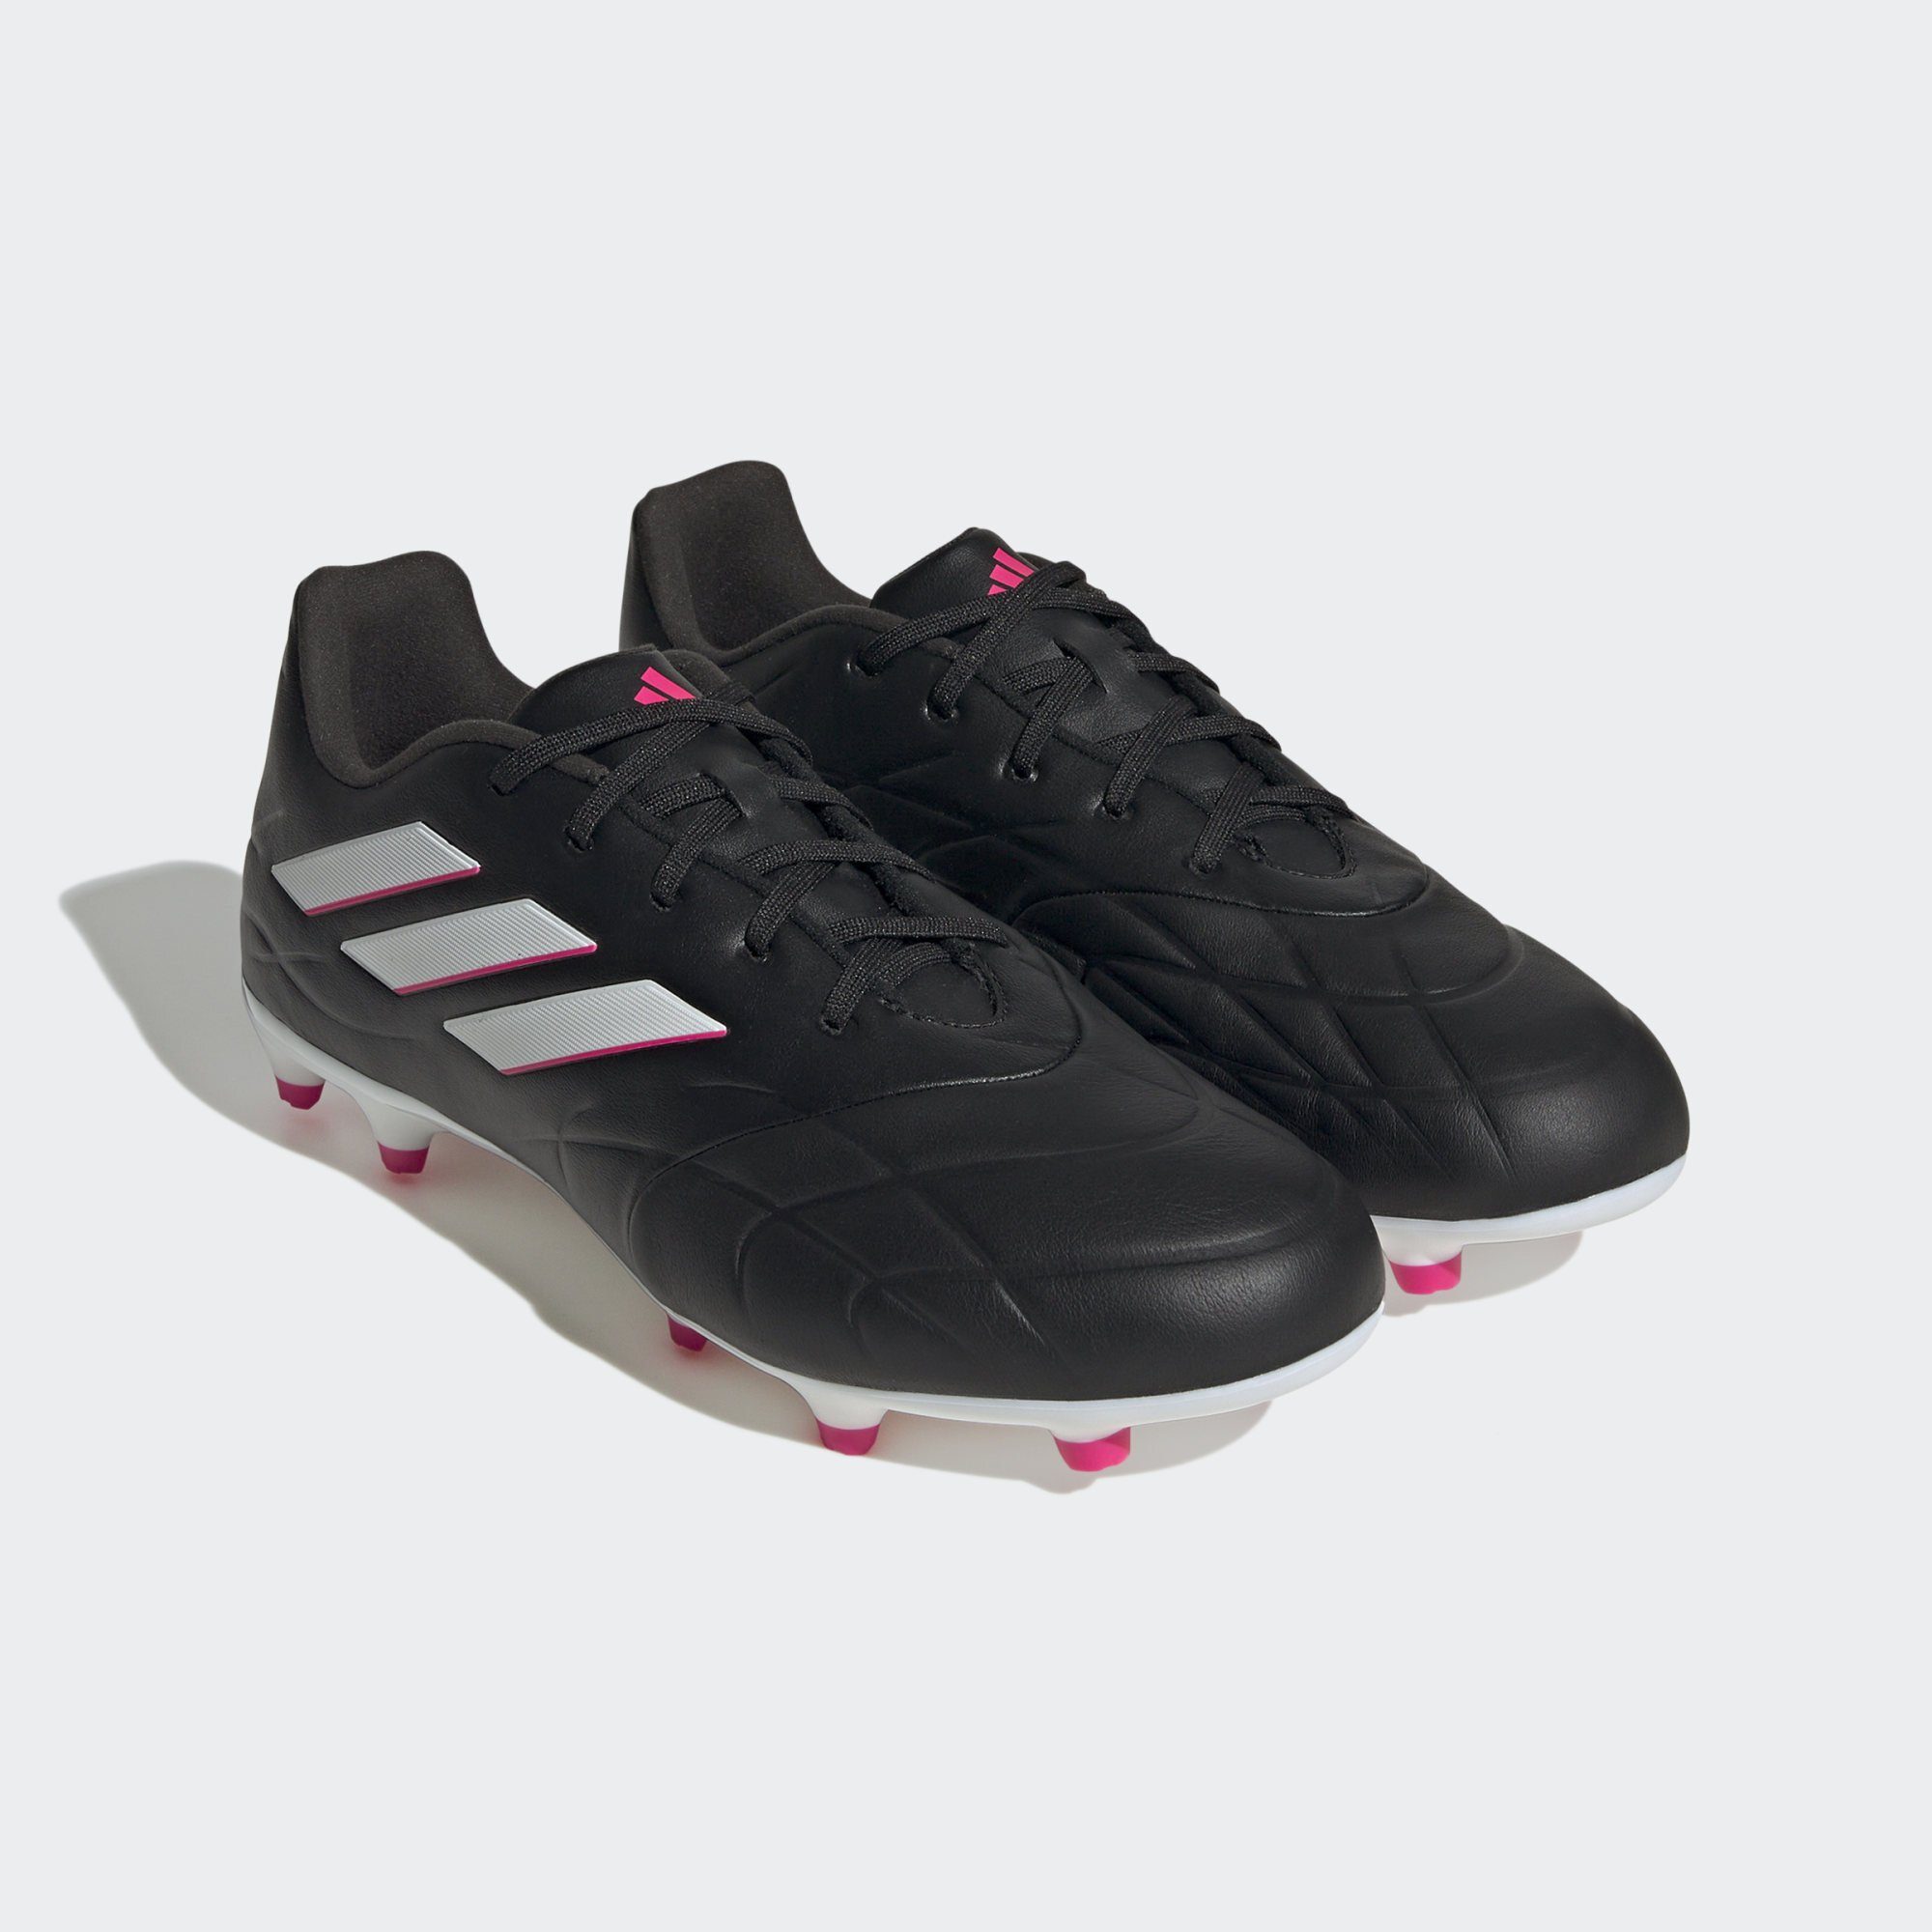 Fußballschuh / Core Pink Metalic FG 2 Black Zero Shock adidas Performance COPA / Team PURE.3 FUSSBALLSCHUH